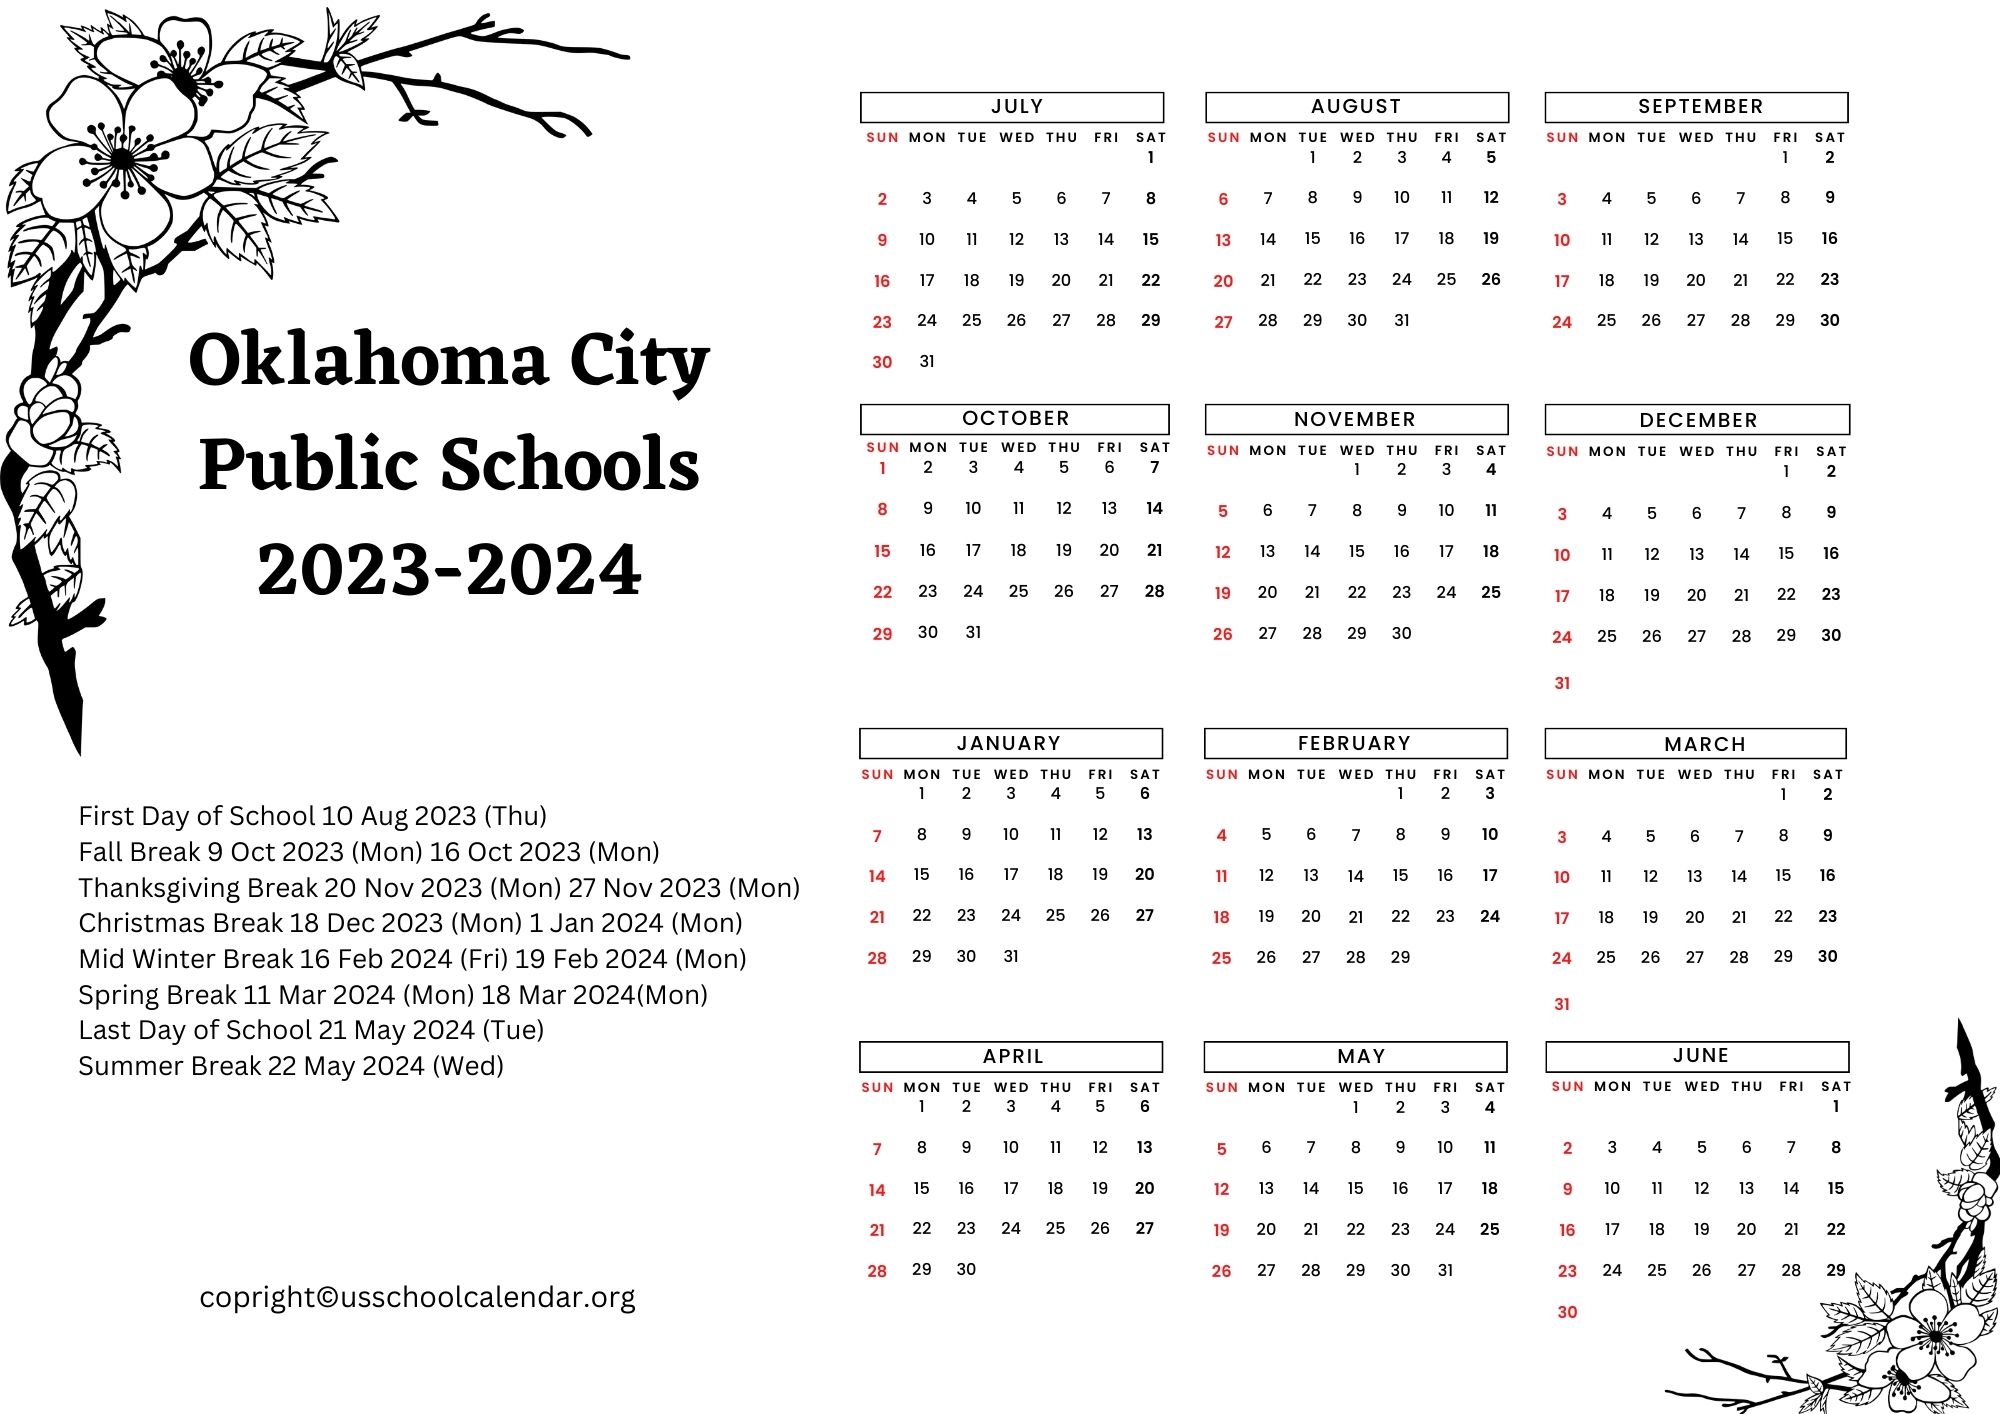 oklahoma-city-public-schools-calendar-with-holidays-2023-2024